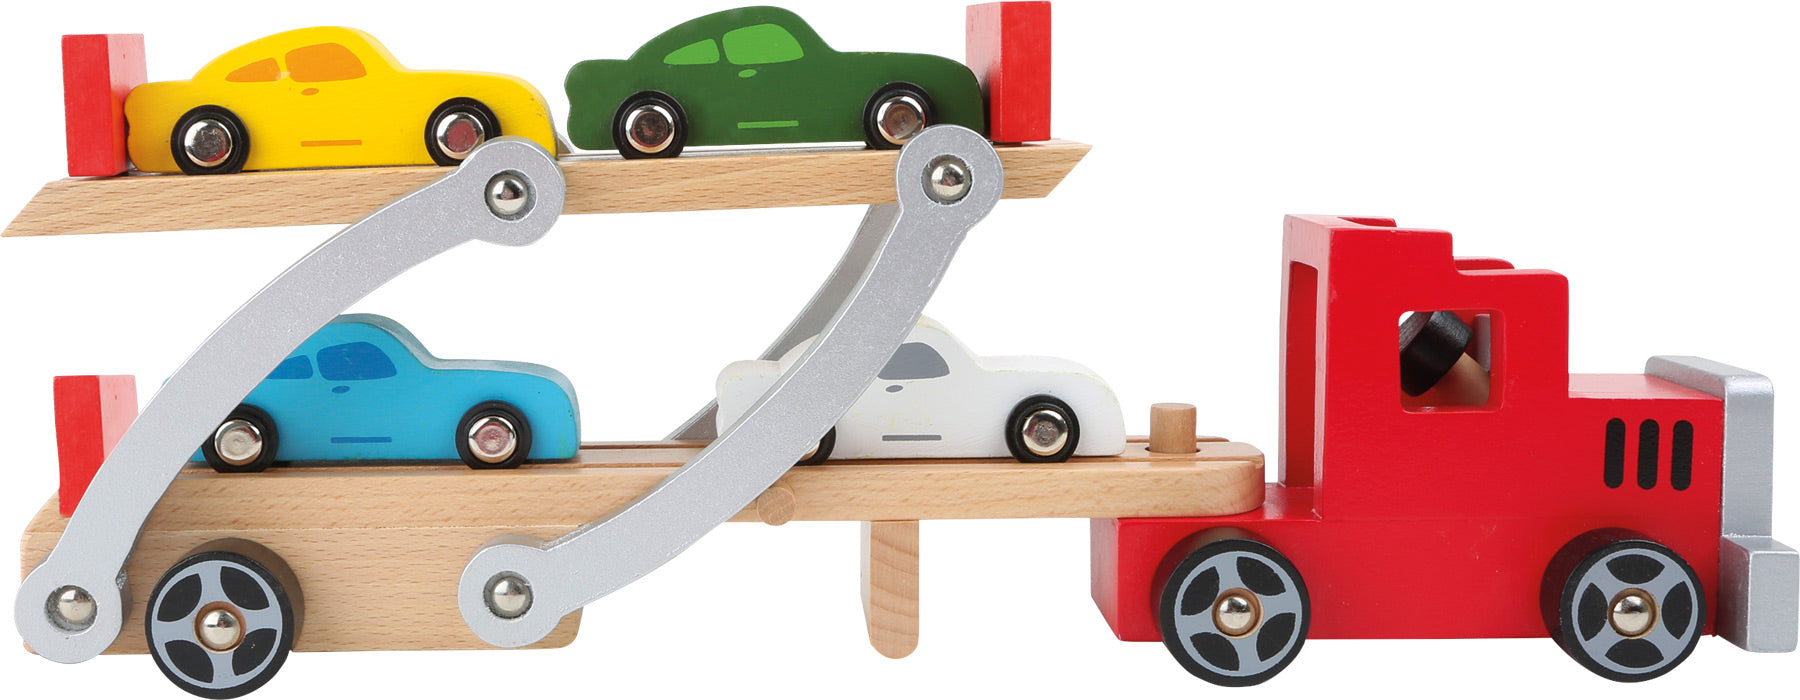 Autotransporter Auto Holz Spielsachen Small foot 